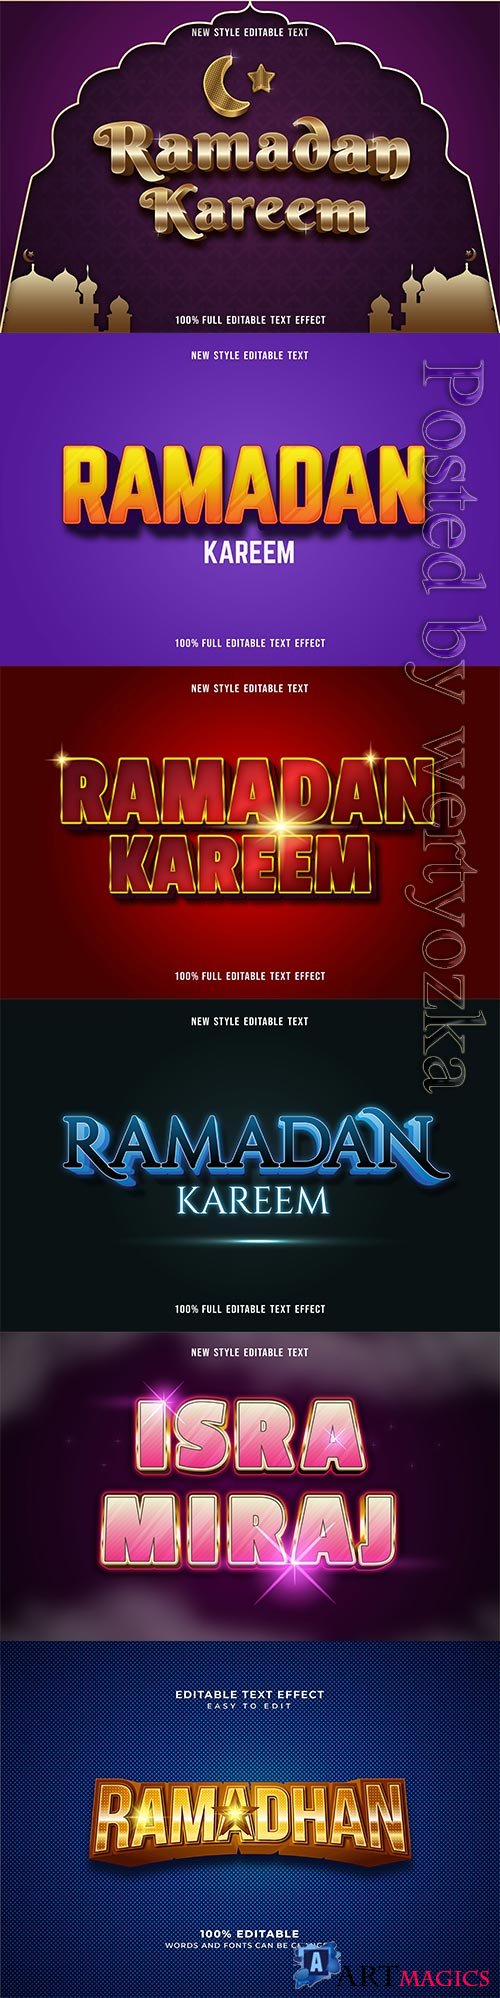 Ramadan kareem, eid mubarak vector text effect vol 7